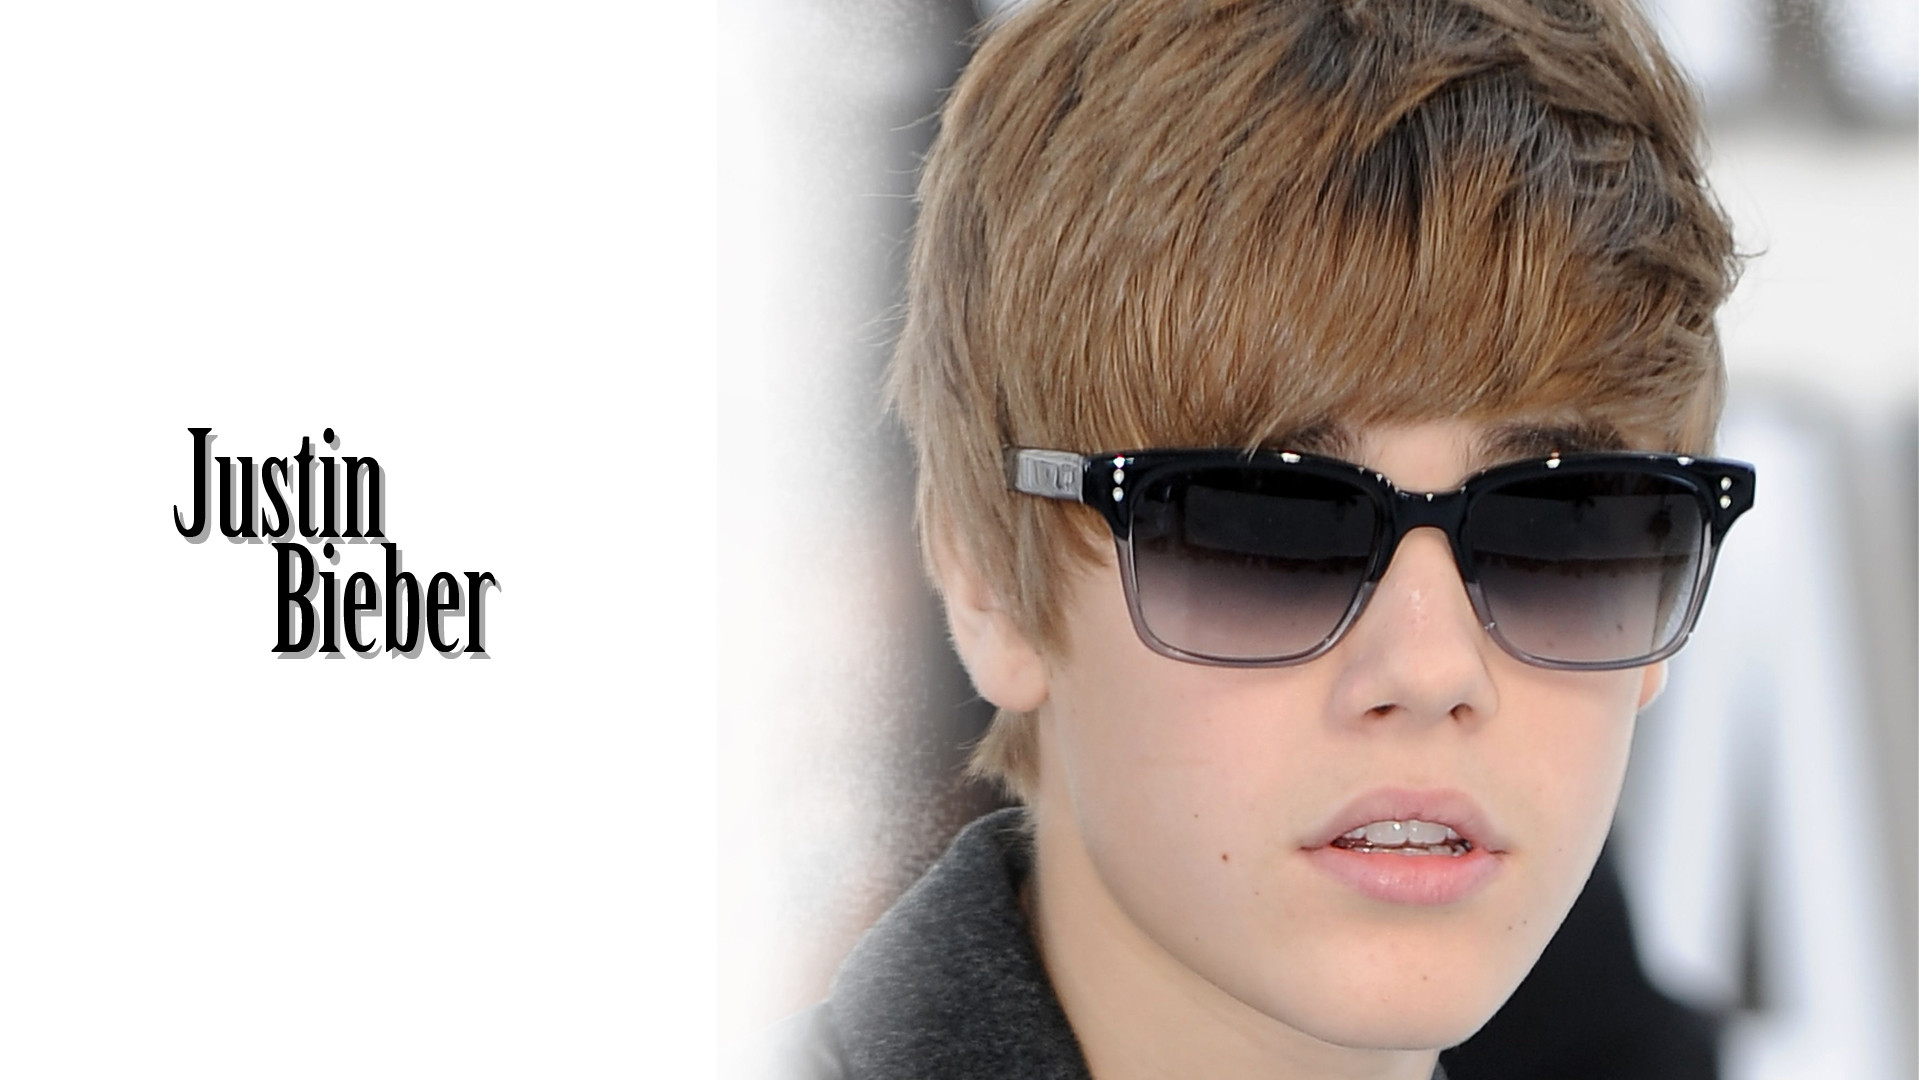 G1 Justin Bieber Wallpaper HD Background Image